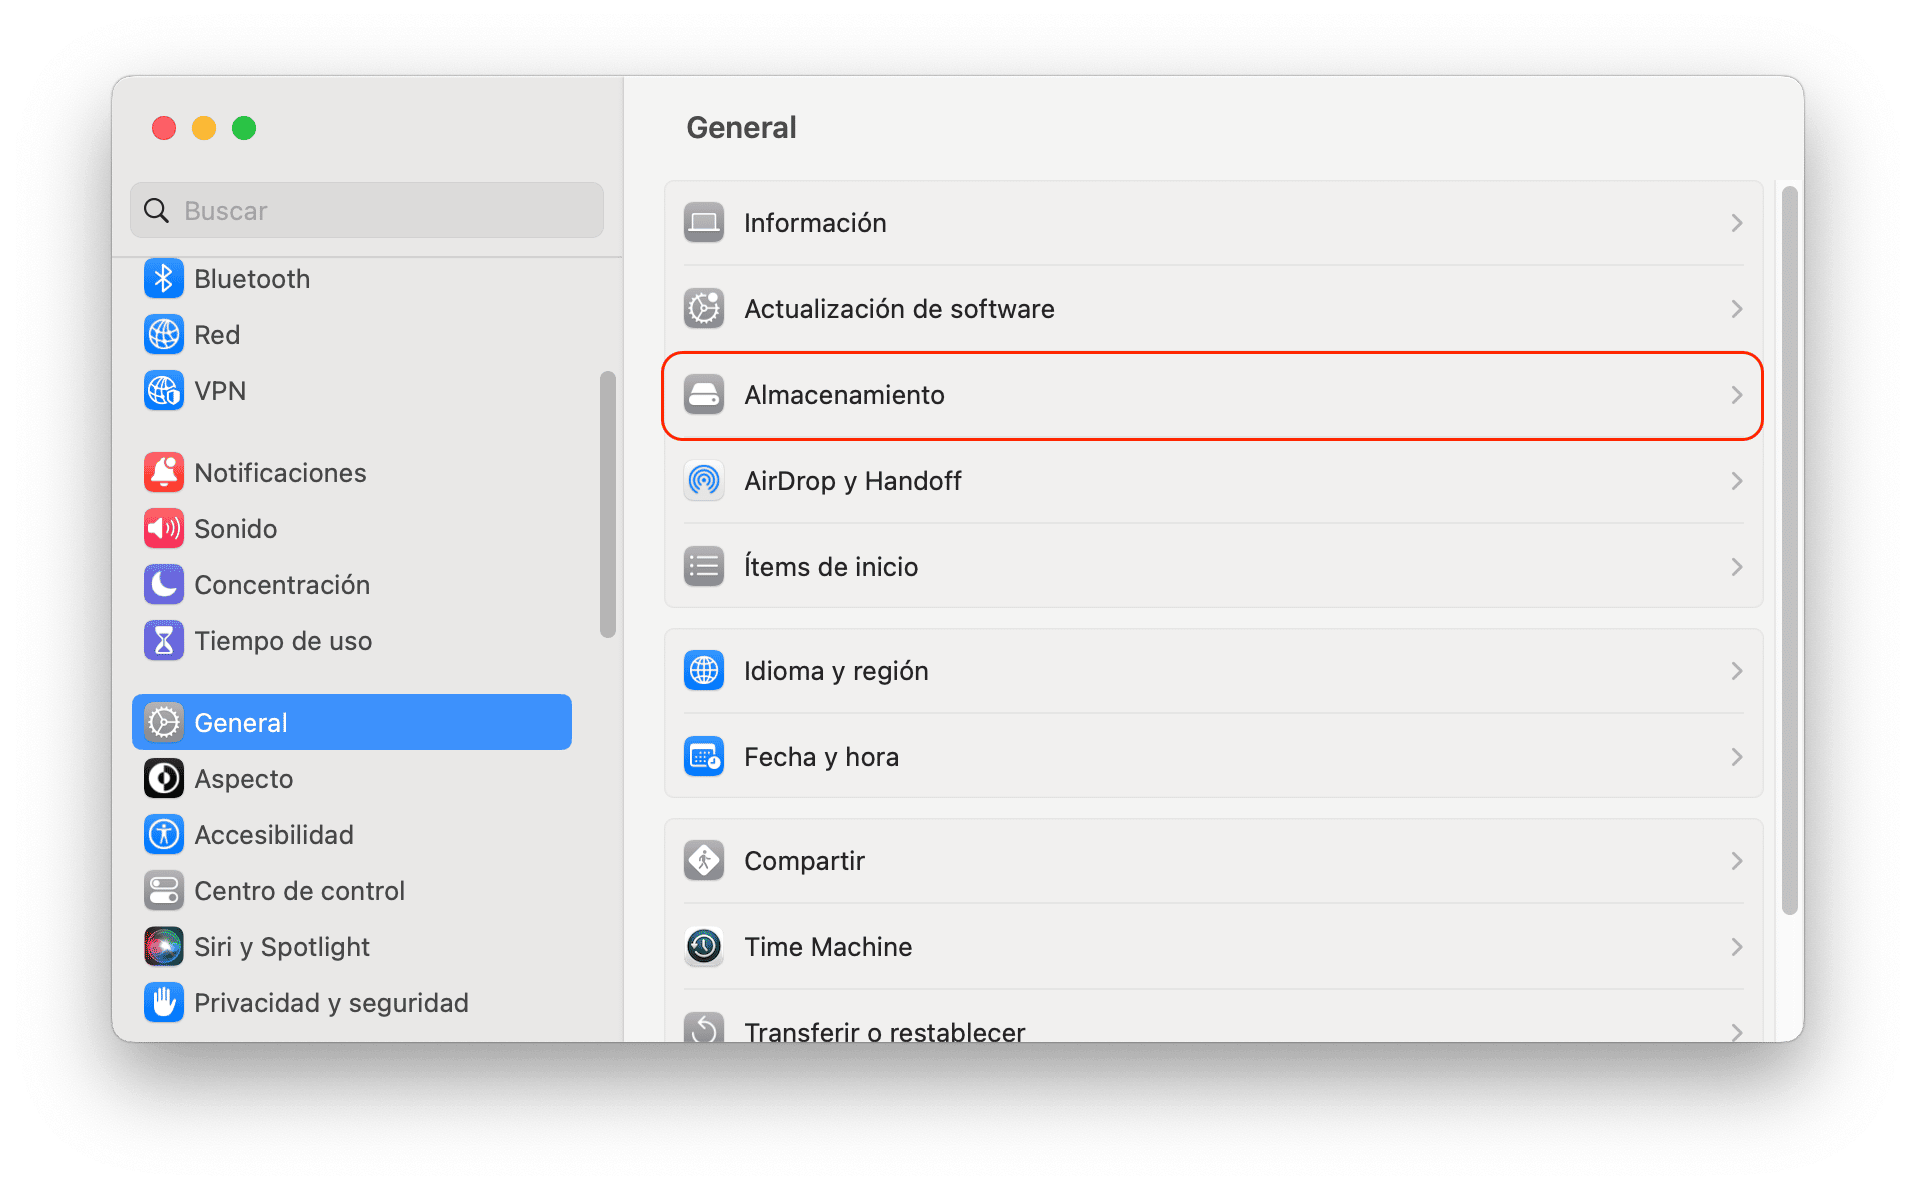 storage usage option in macOS Ventura